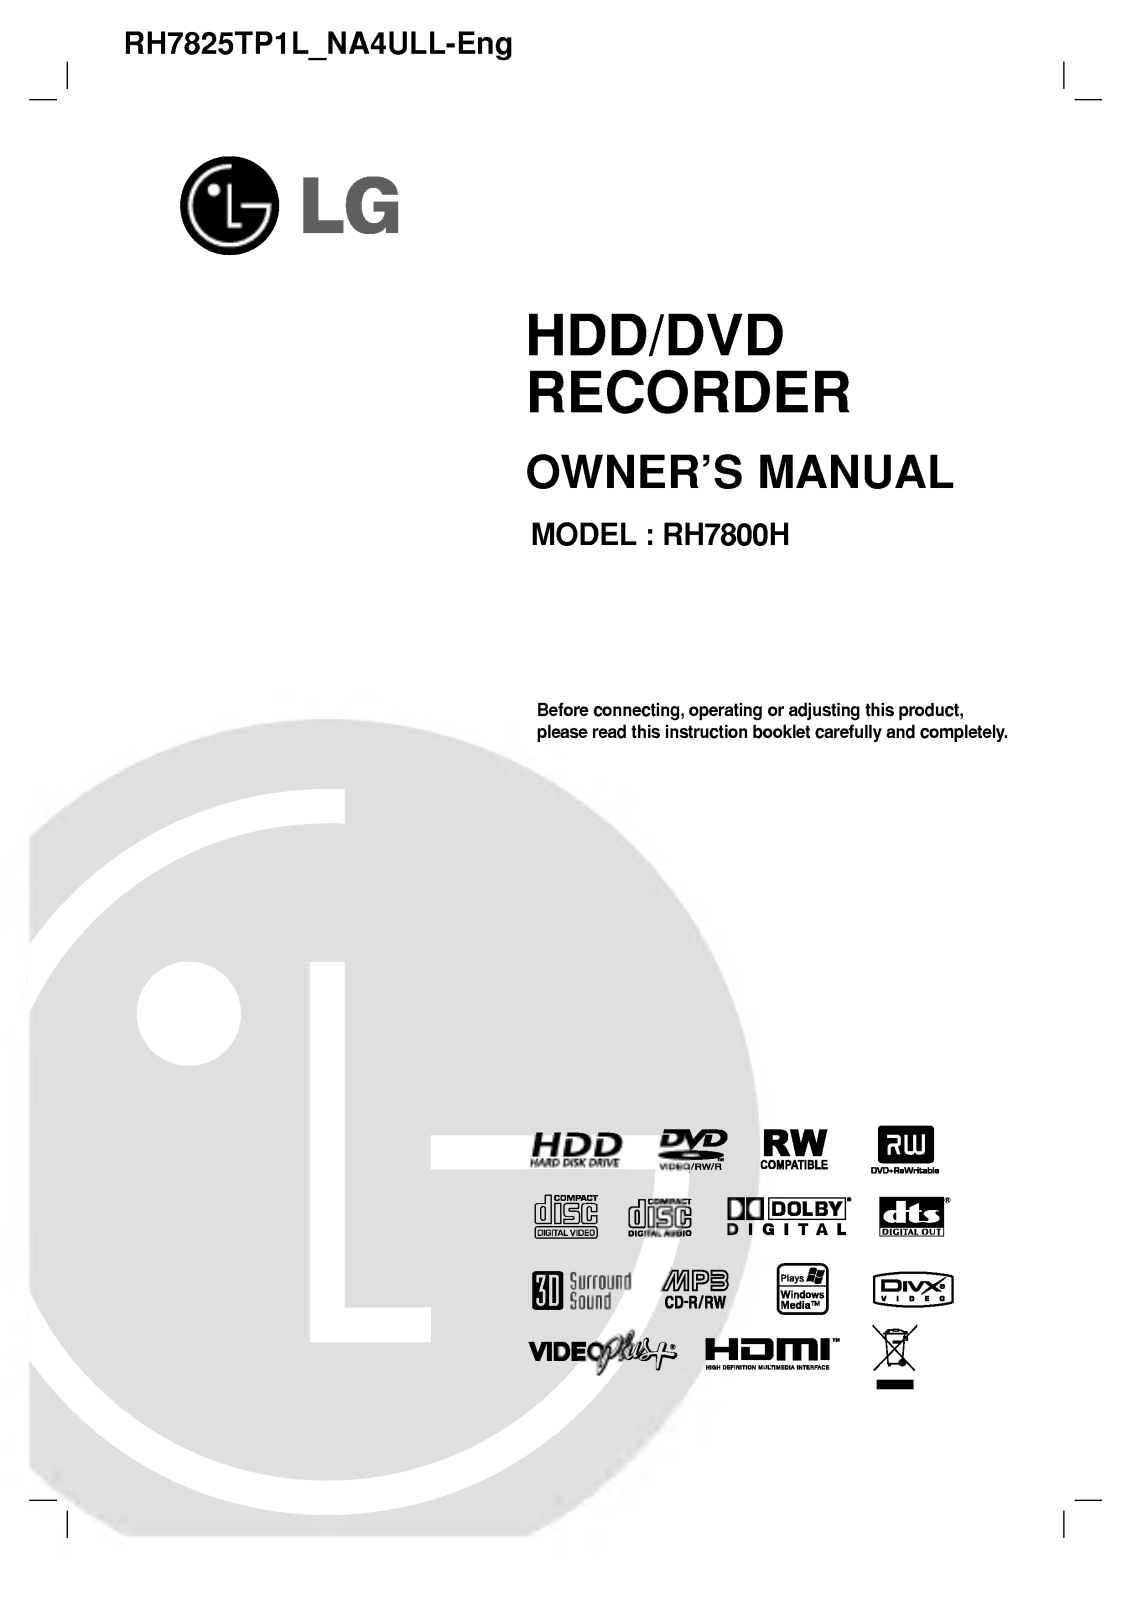 LG RH7825TP1L Owner’s Manual